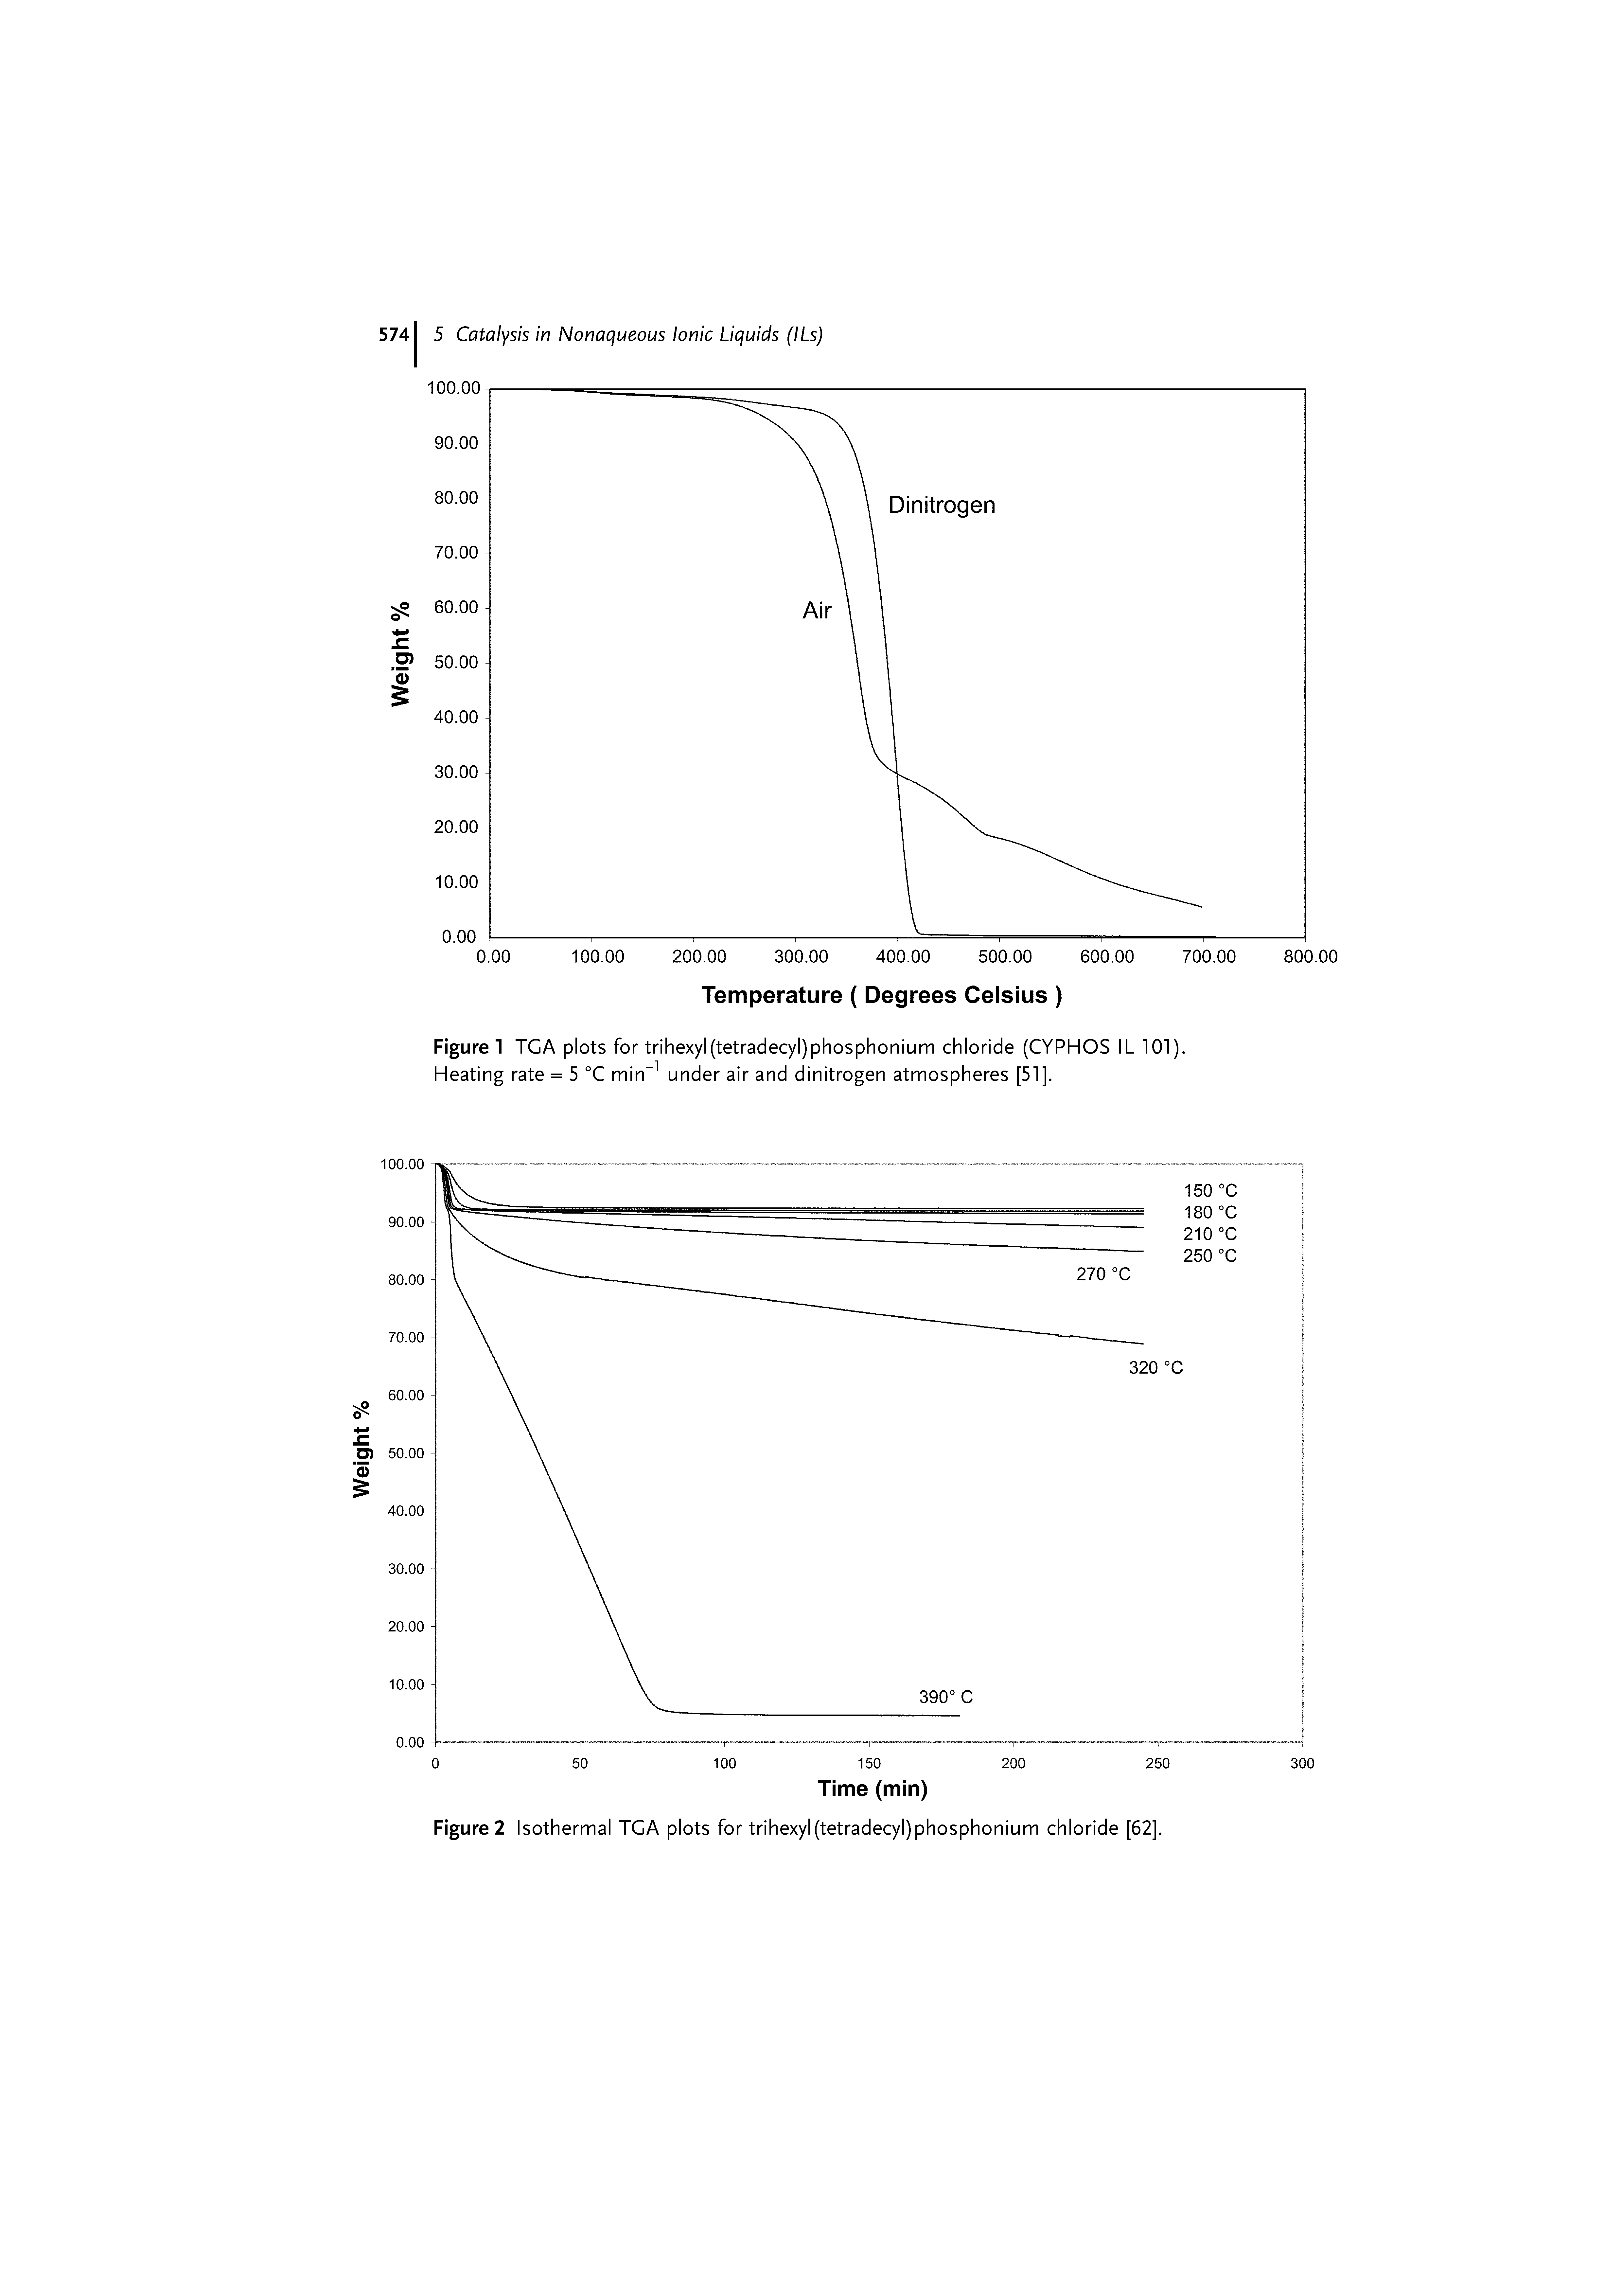 Figure TGA plots for trihexyl tetradecyl)phosphonium chloride (CYPHOS IL 101). Heating rate = 5 °C min under air and dinitrogen atmospheres [51].